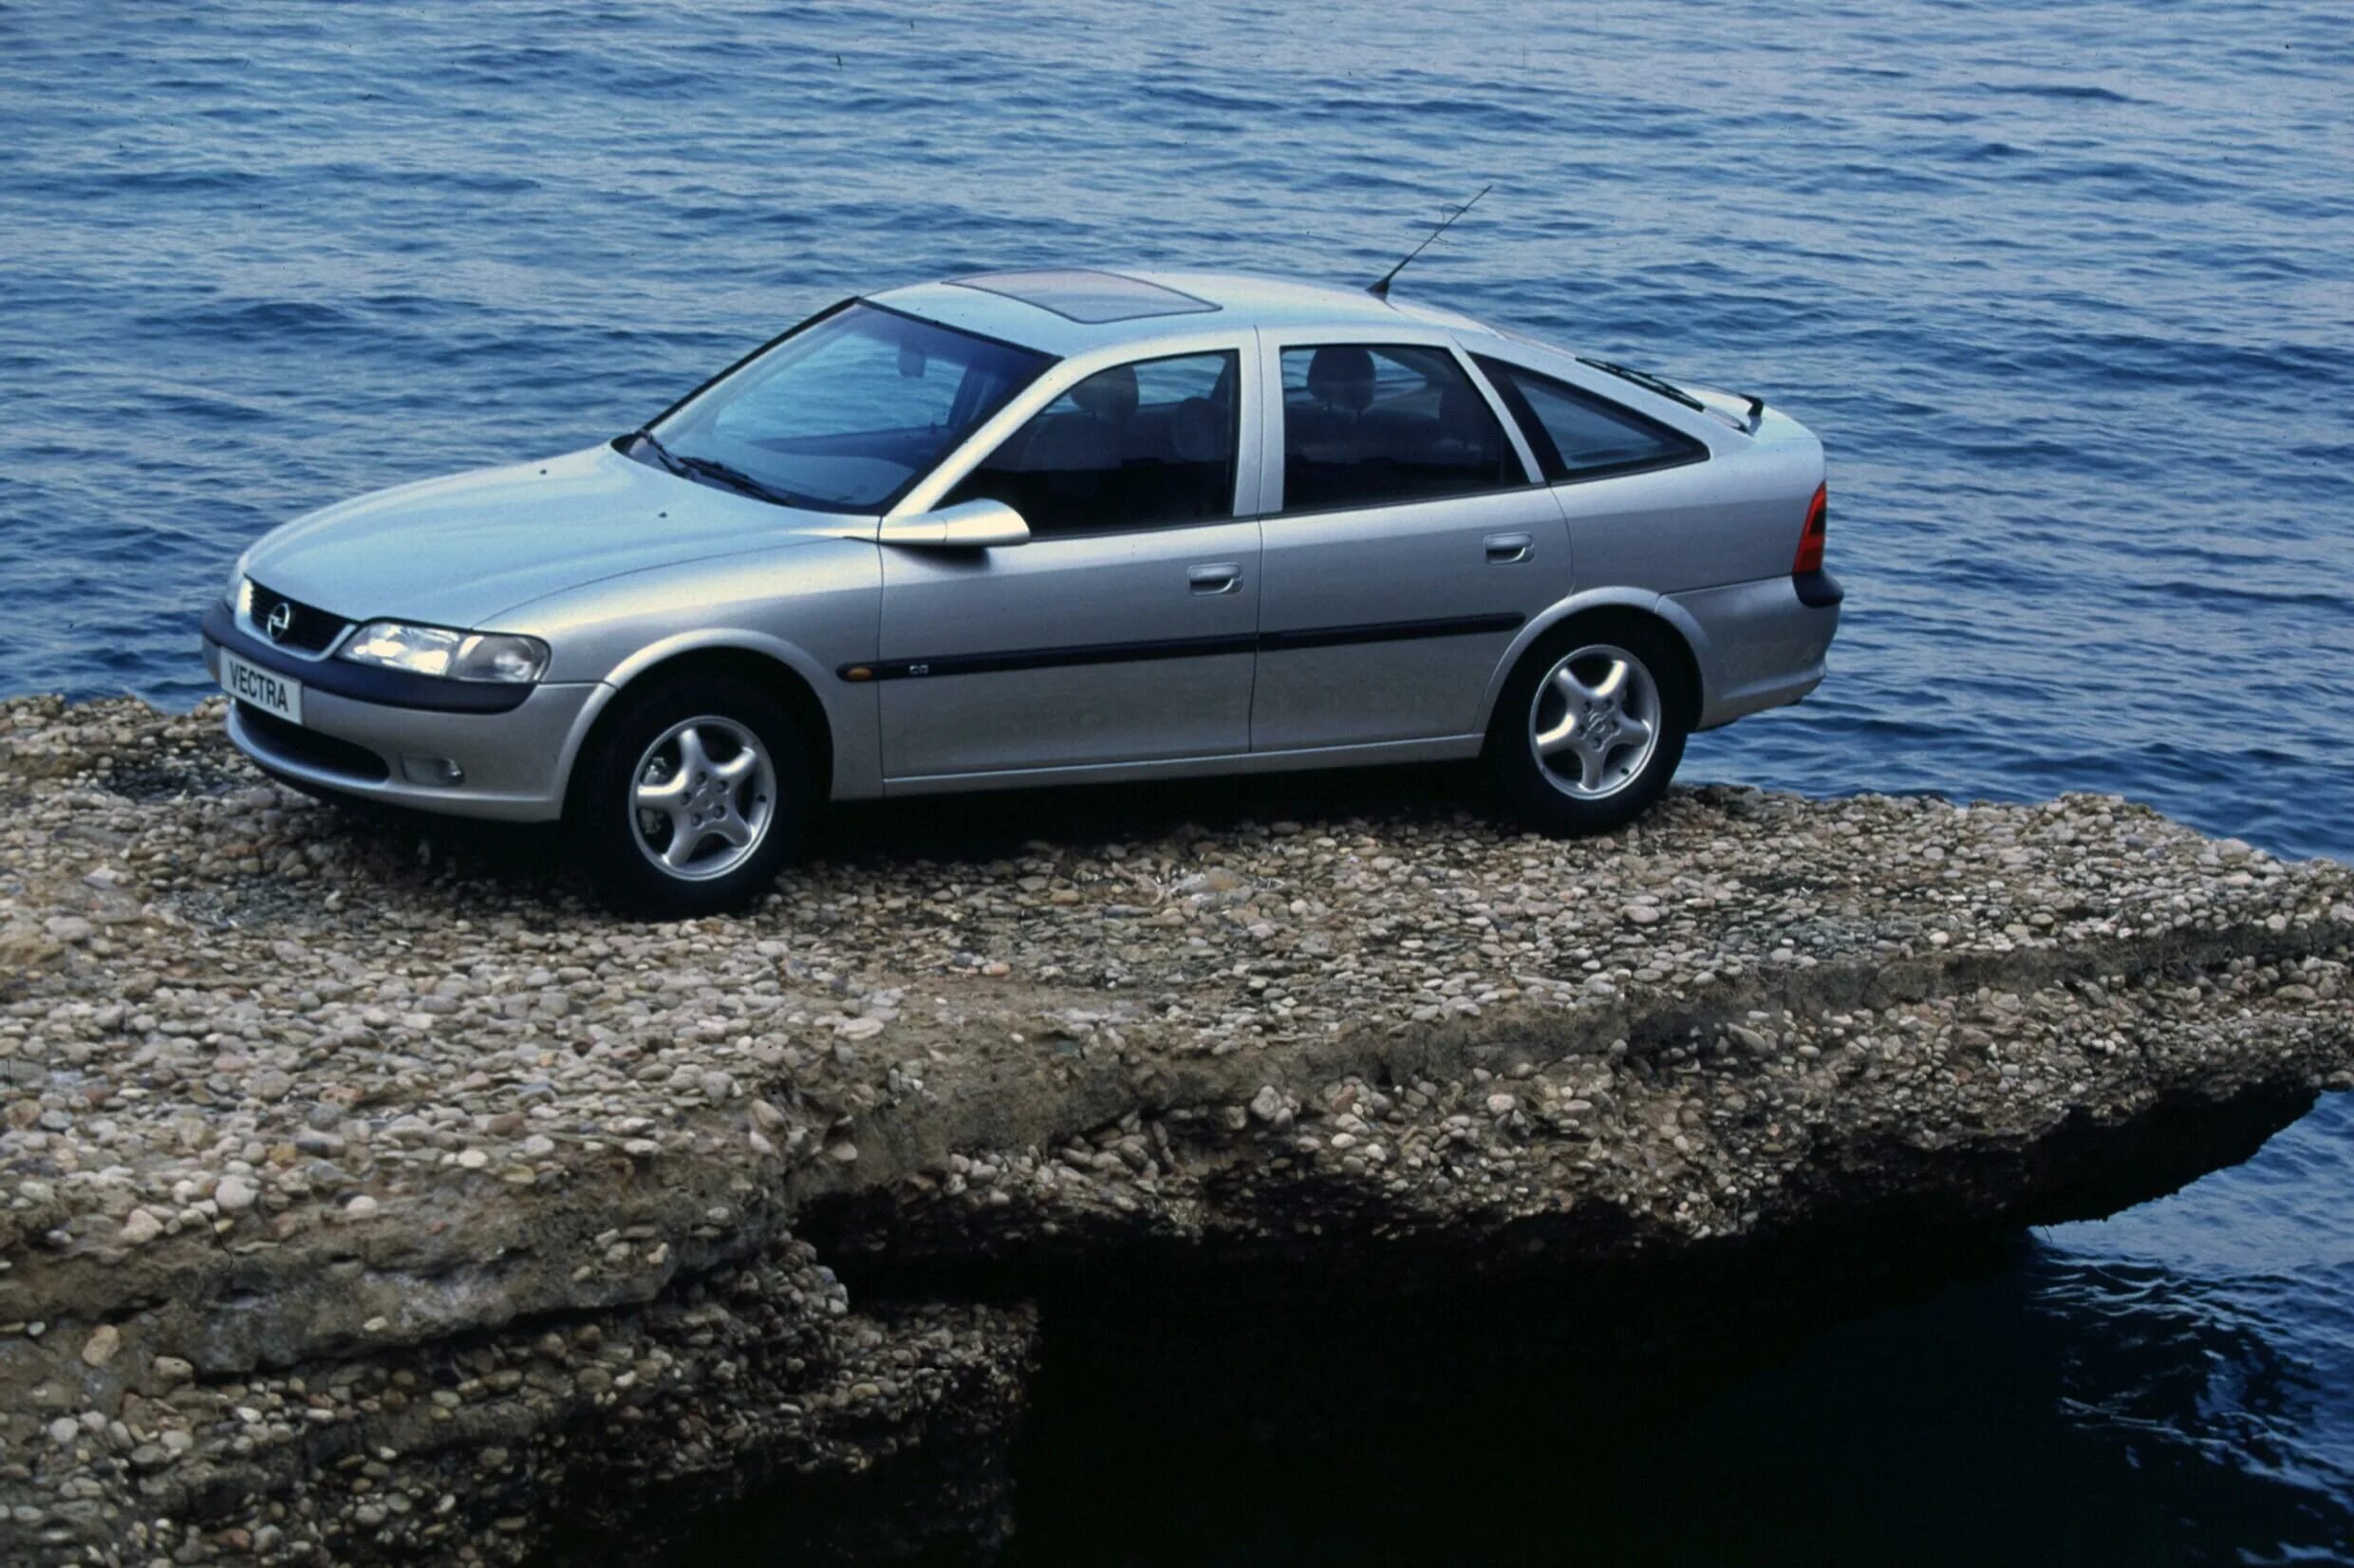 Opel Vectra Hatchback 1995. Опель Вектра хэтчбек 1995. Опель Вектра хэтчбек 2000. Opel Vectra 1998 хэтчбек.